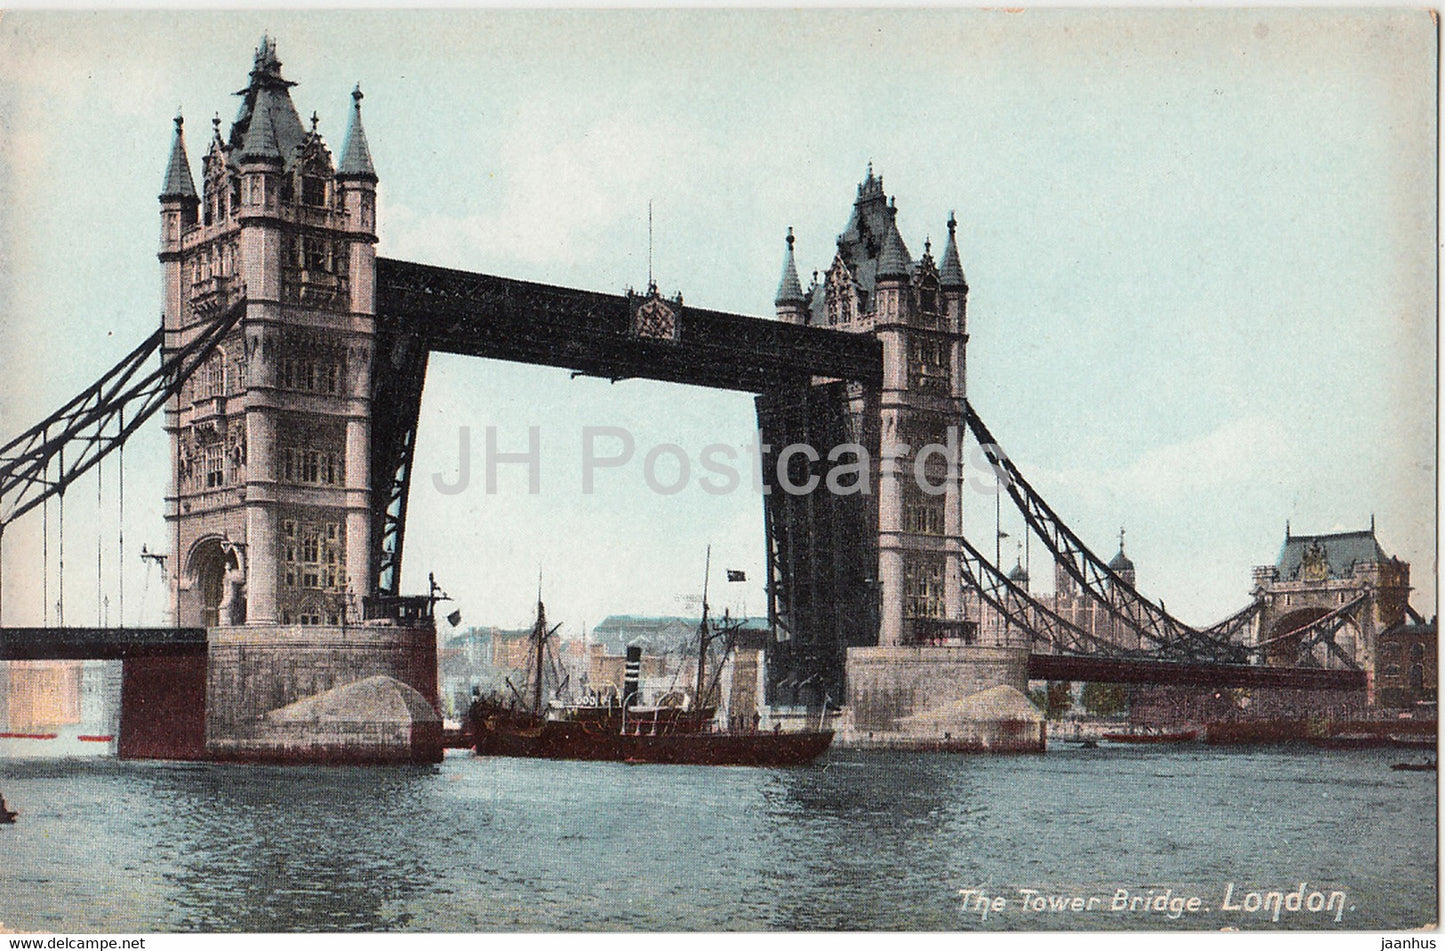 London - The Tower Bridge - ship - streamer - old postcard - England - United Kingdom - unused - JH Postcards